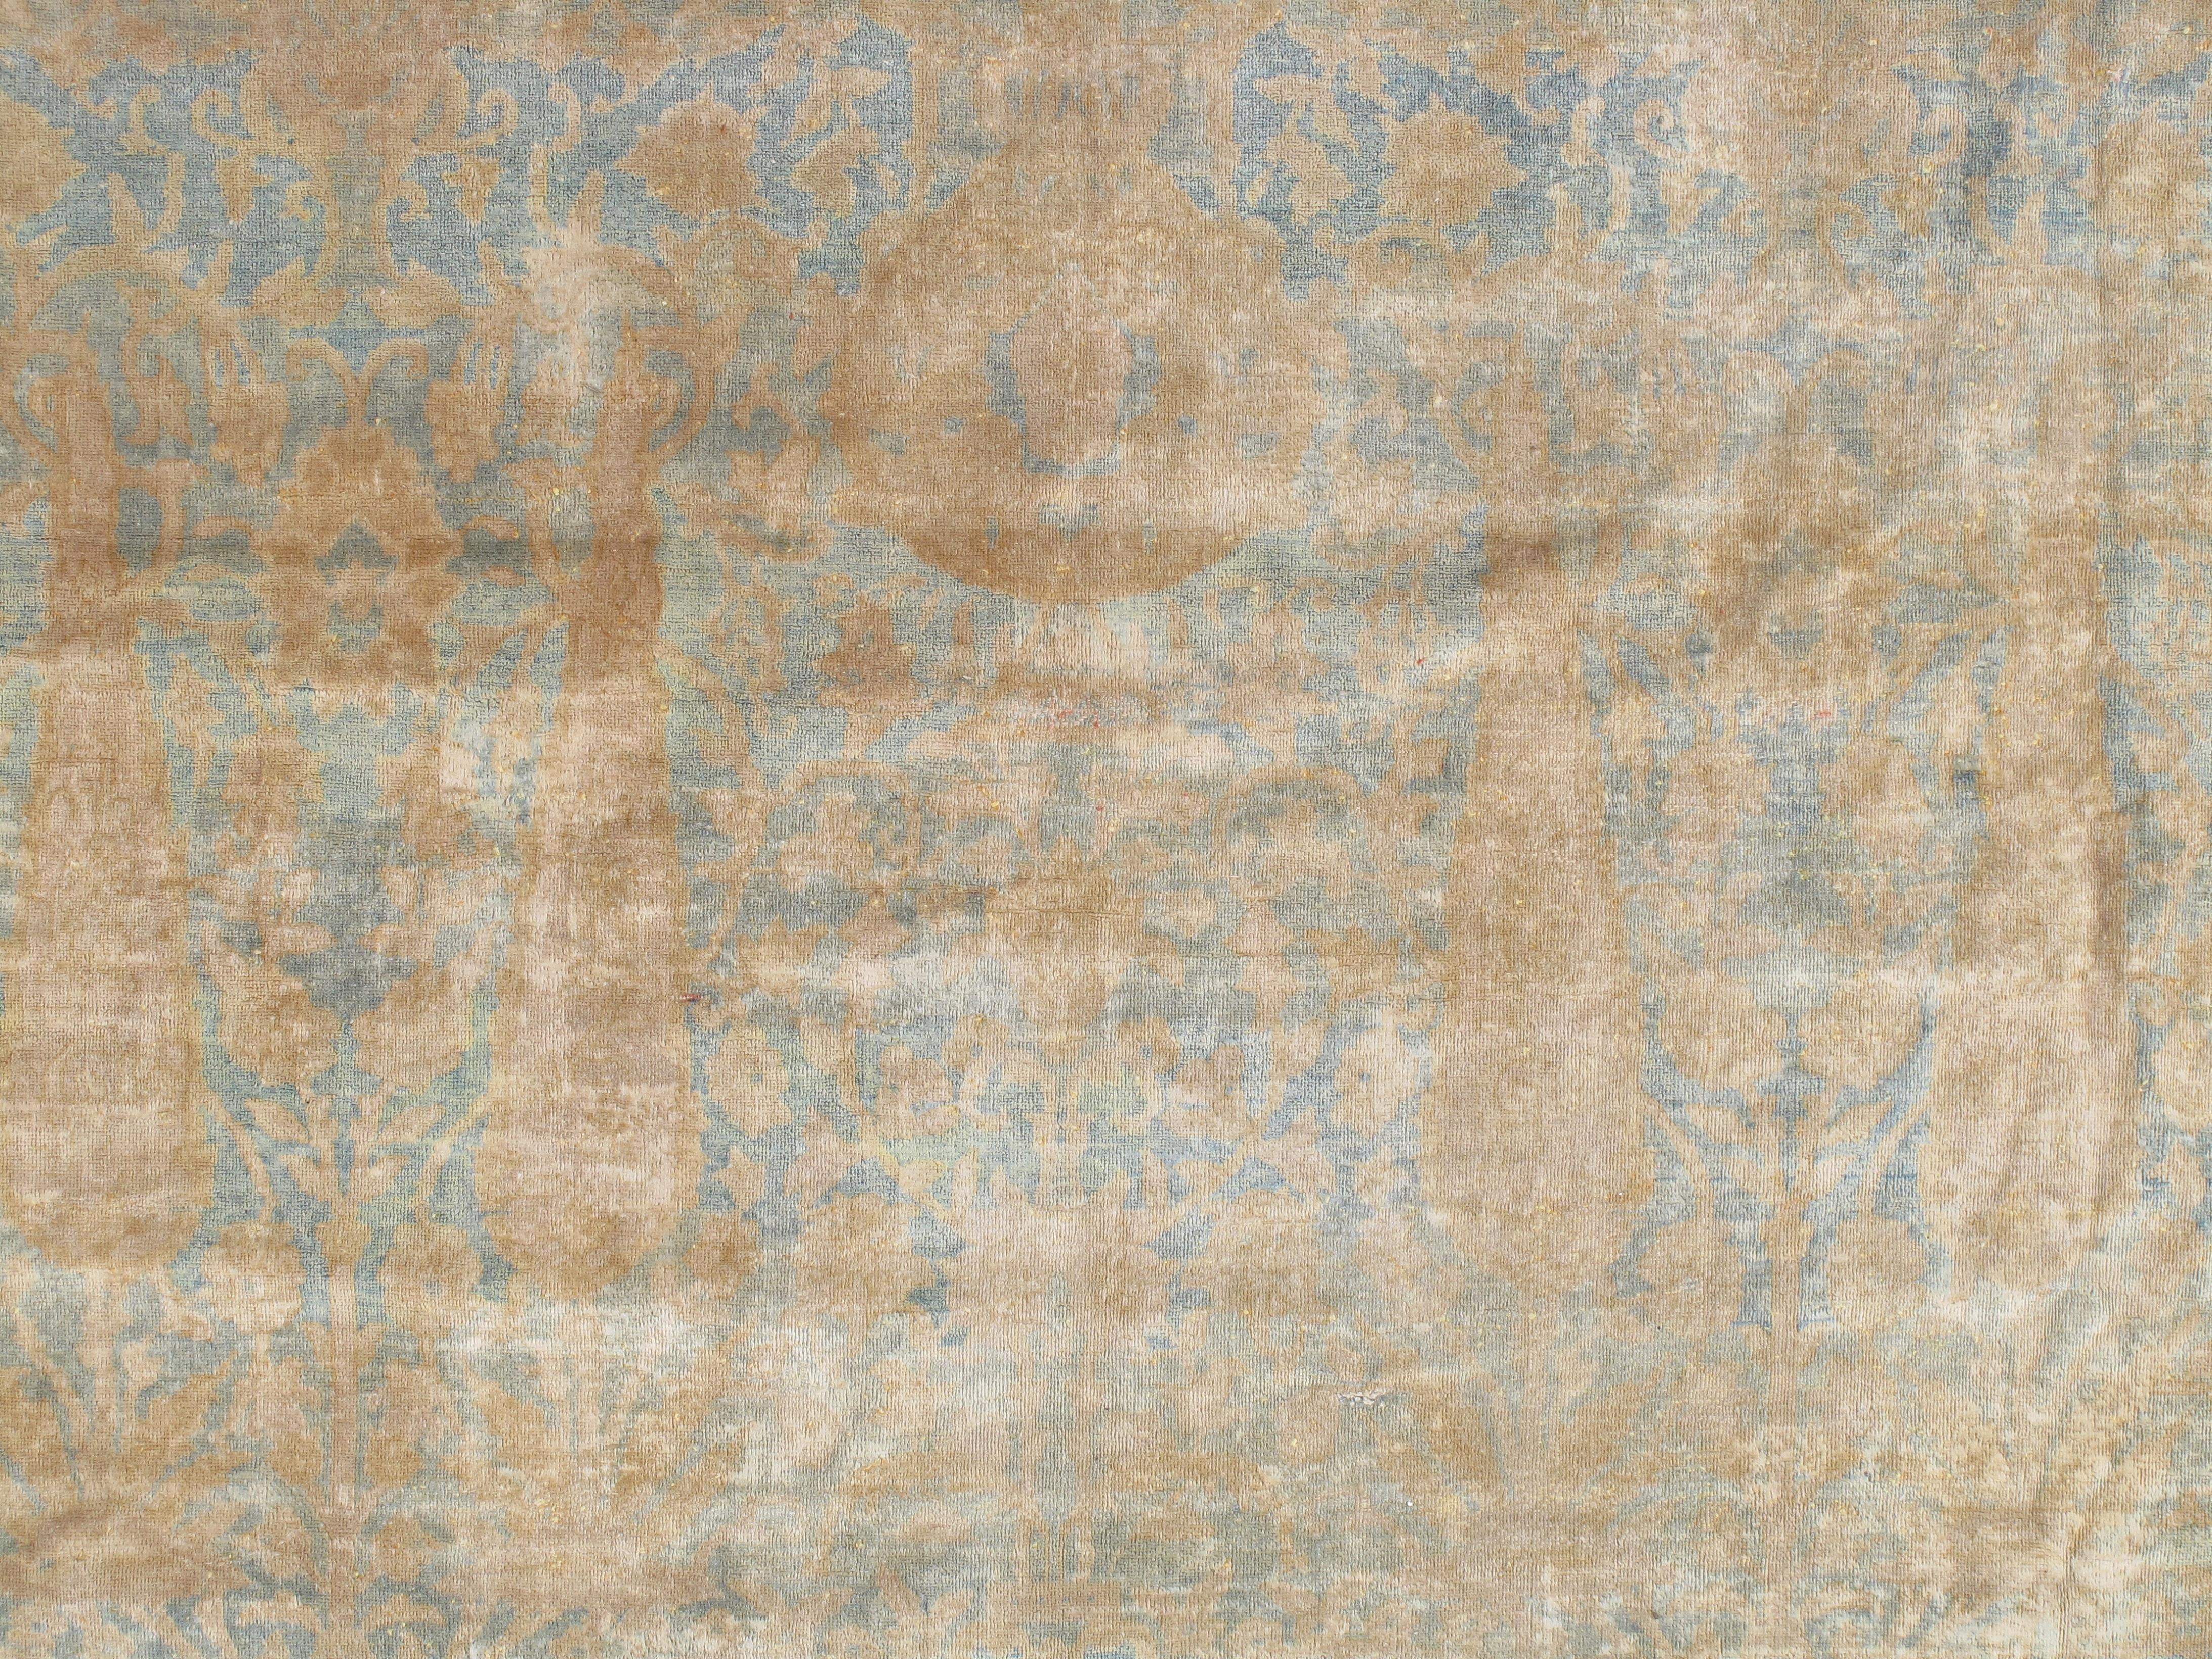 20th Century Antique Indian Agra Carpet, Handmade Oriental Rug, Light Blue, Gold, Ivory, Soft For Sale